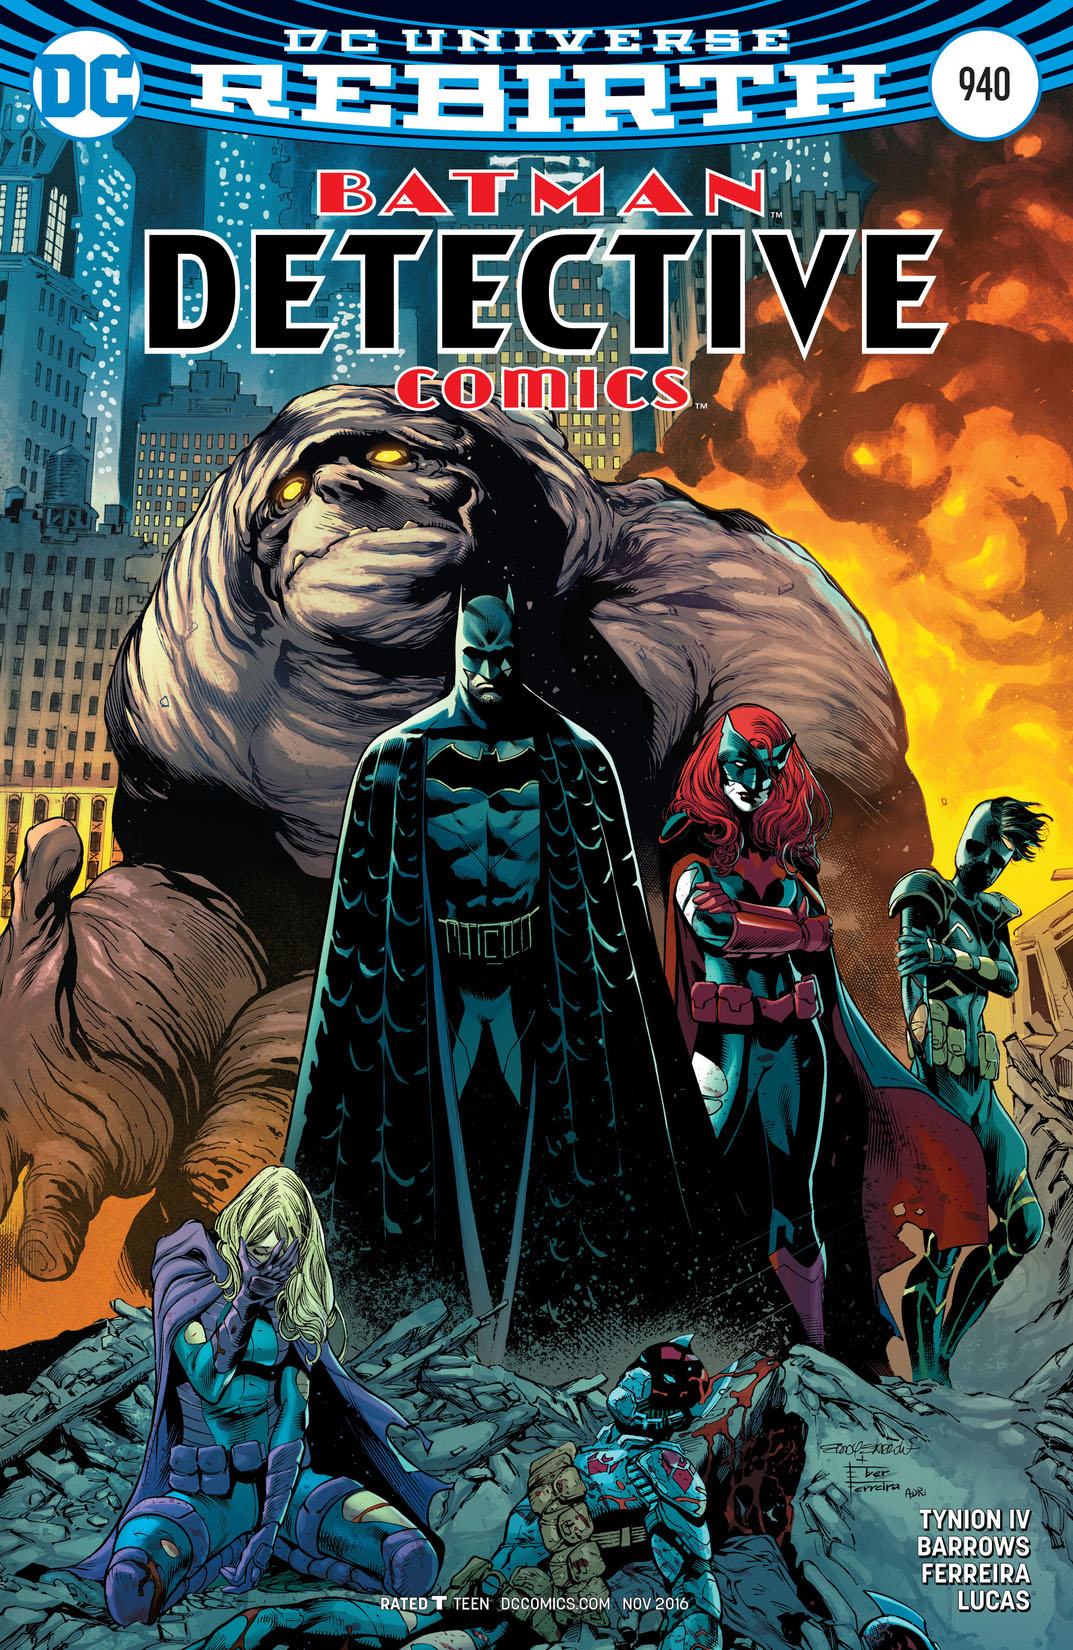 Detective Comics (2016-) #940 preview images